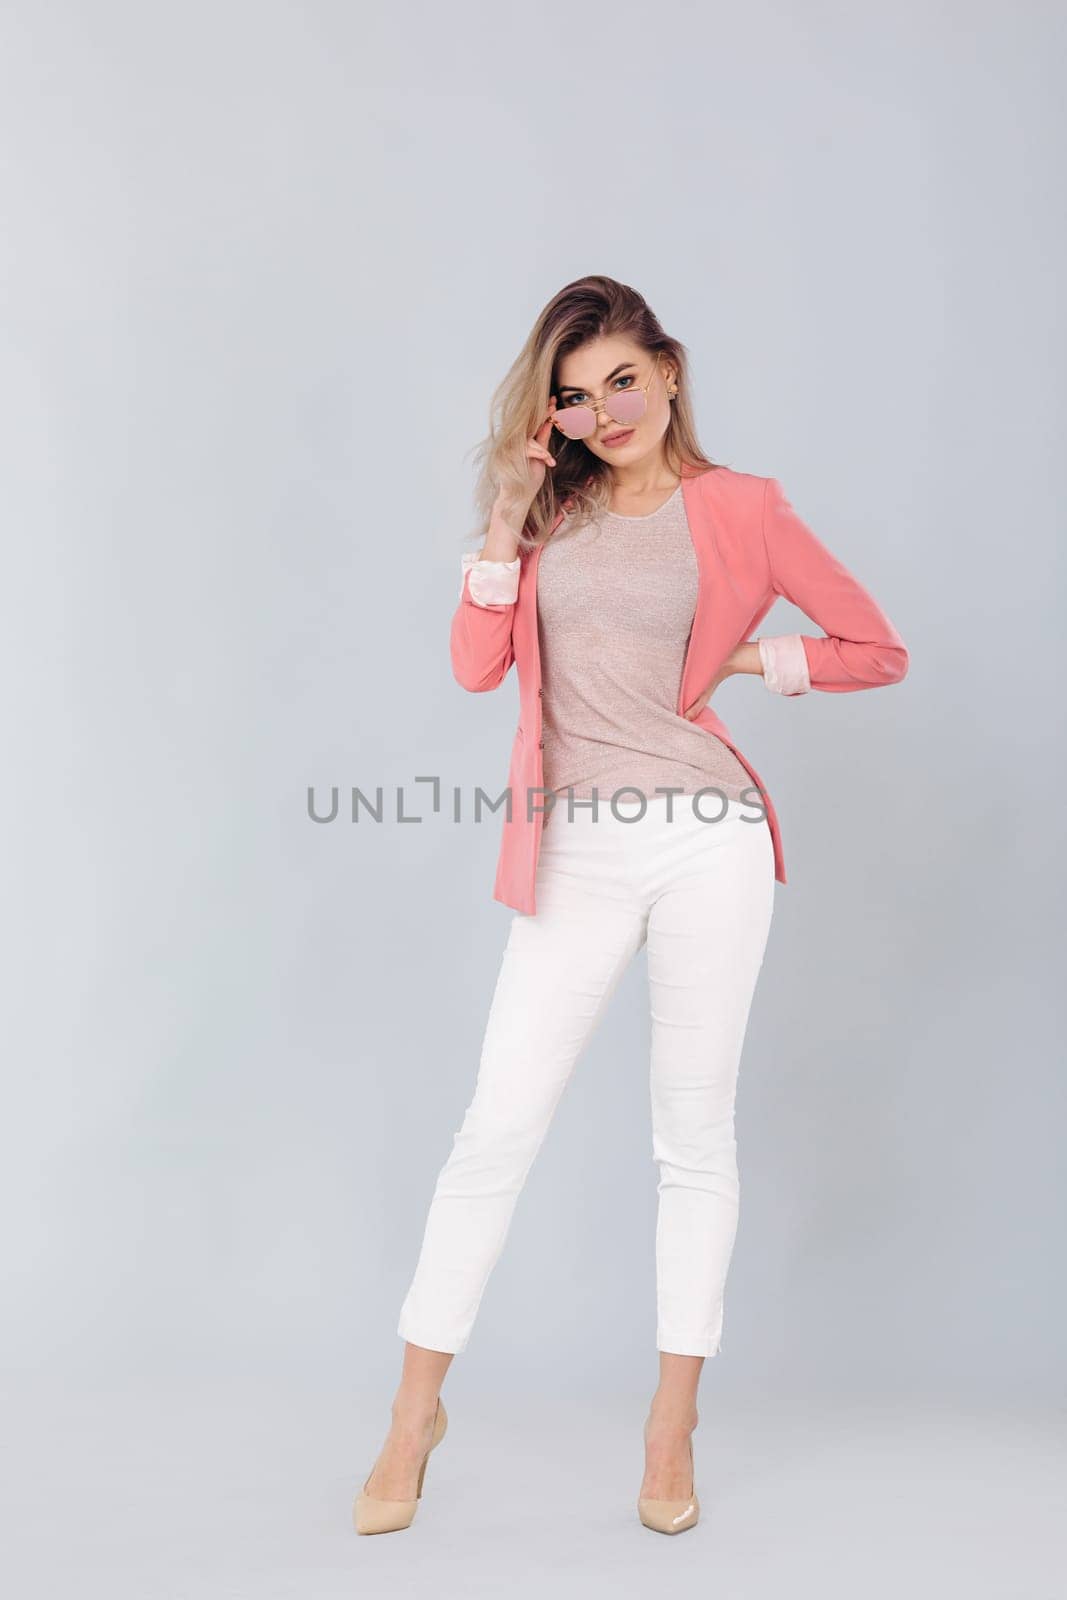 Full length portrait of attractive elegant blonde woman in pastel pink jacket posing in studio. woman dressed in trendy spring outfit